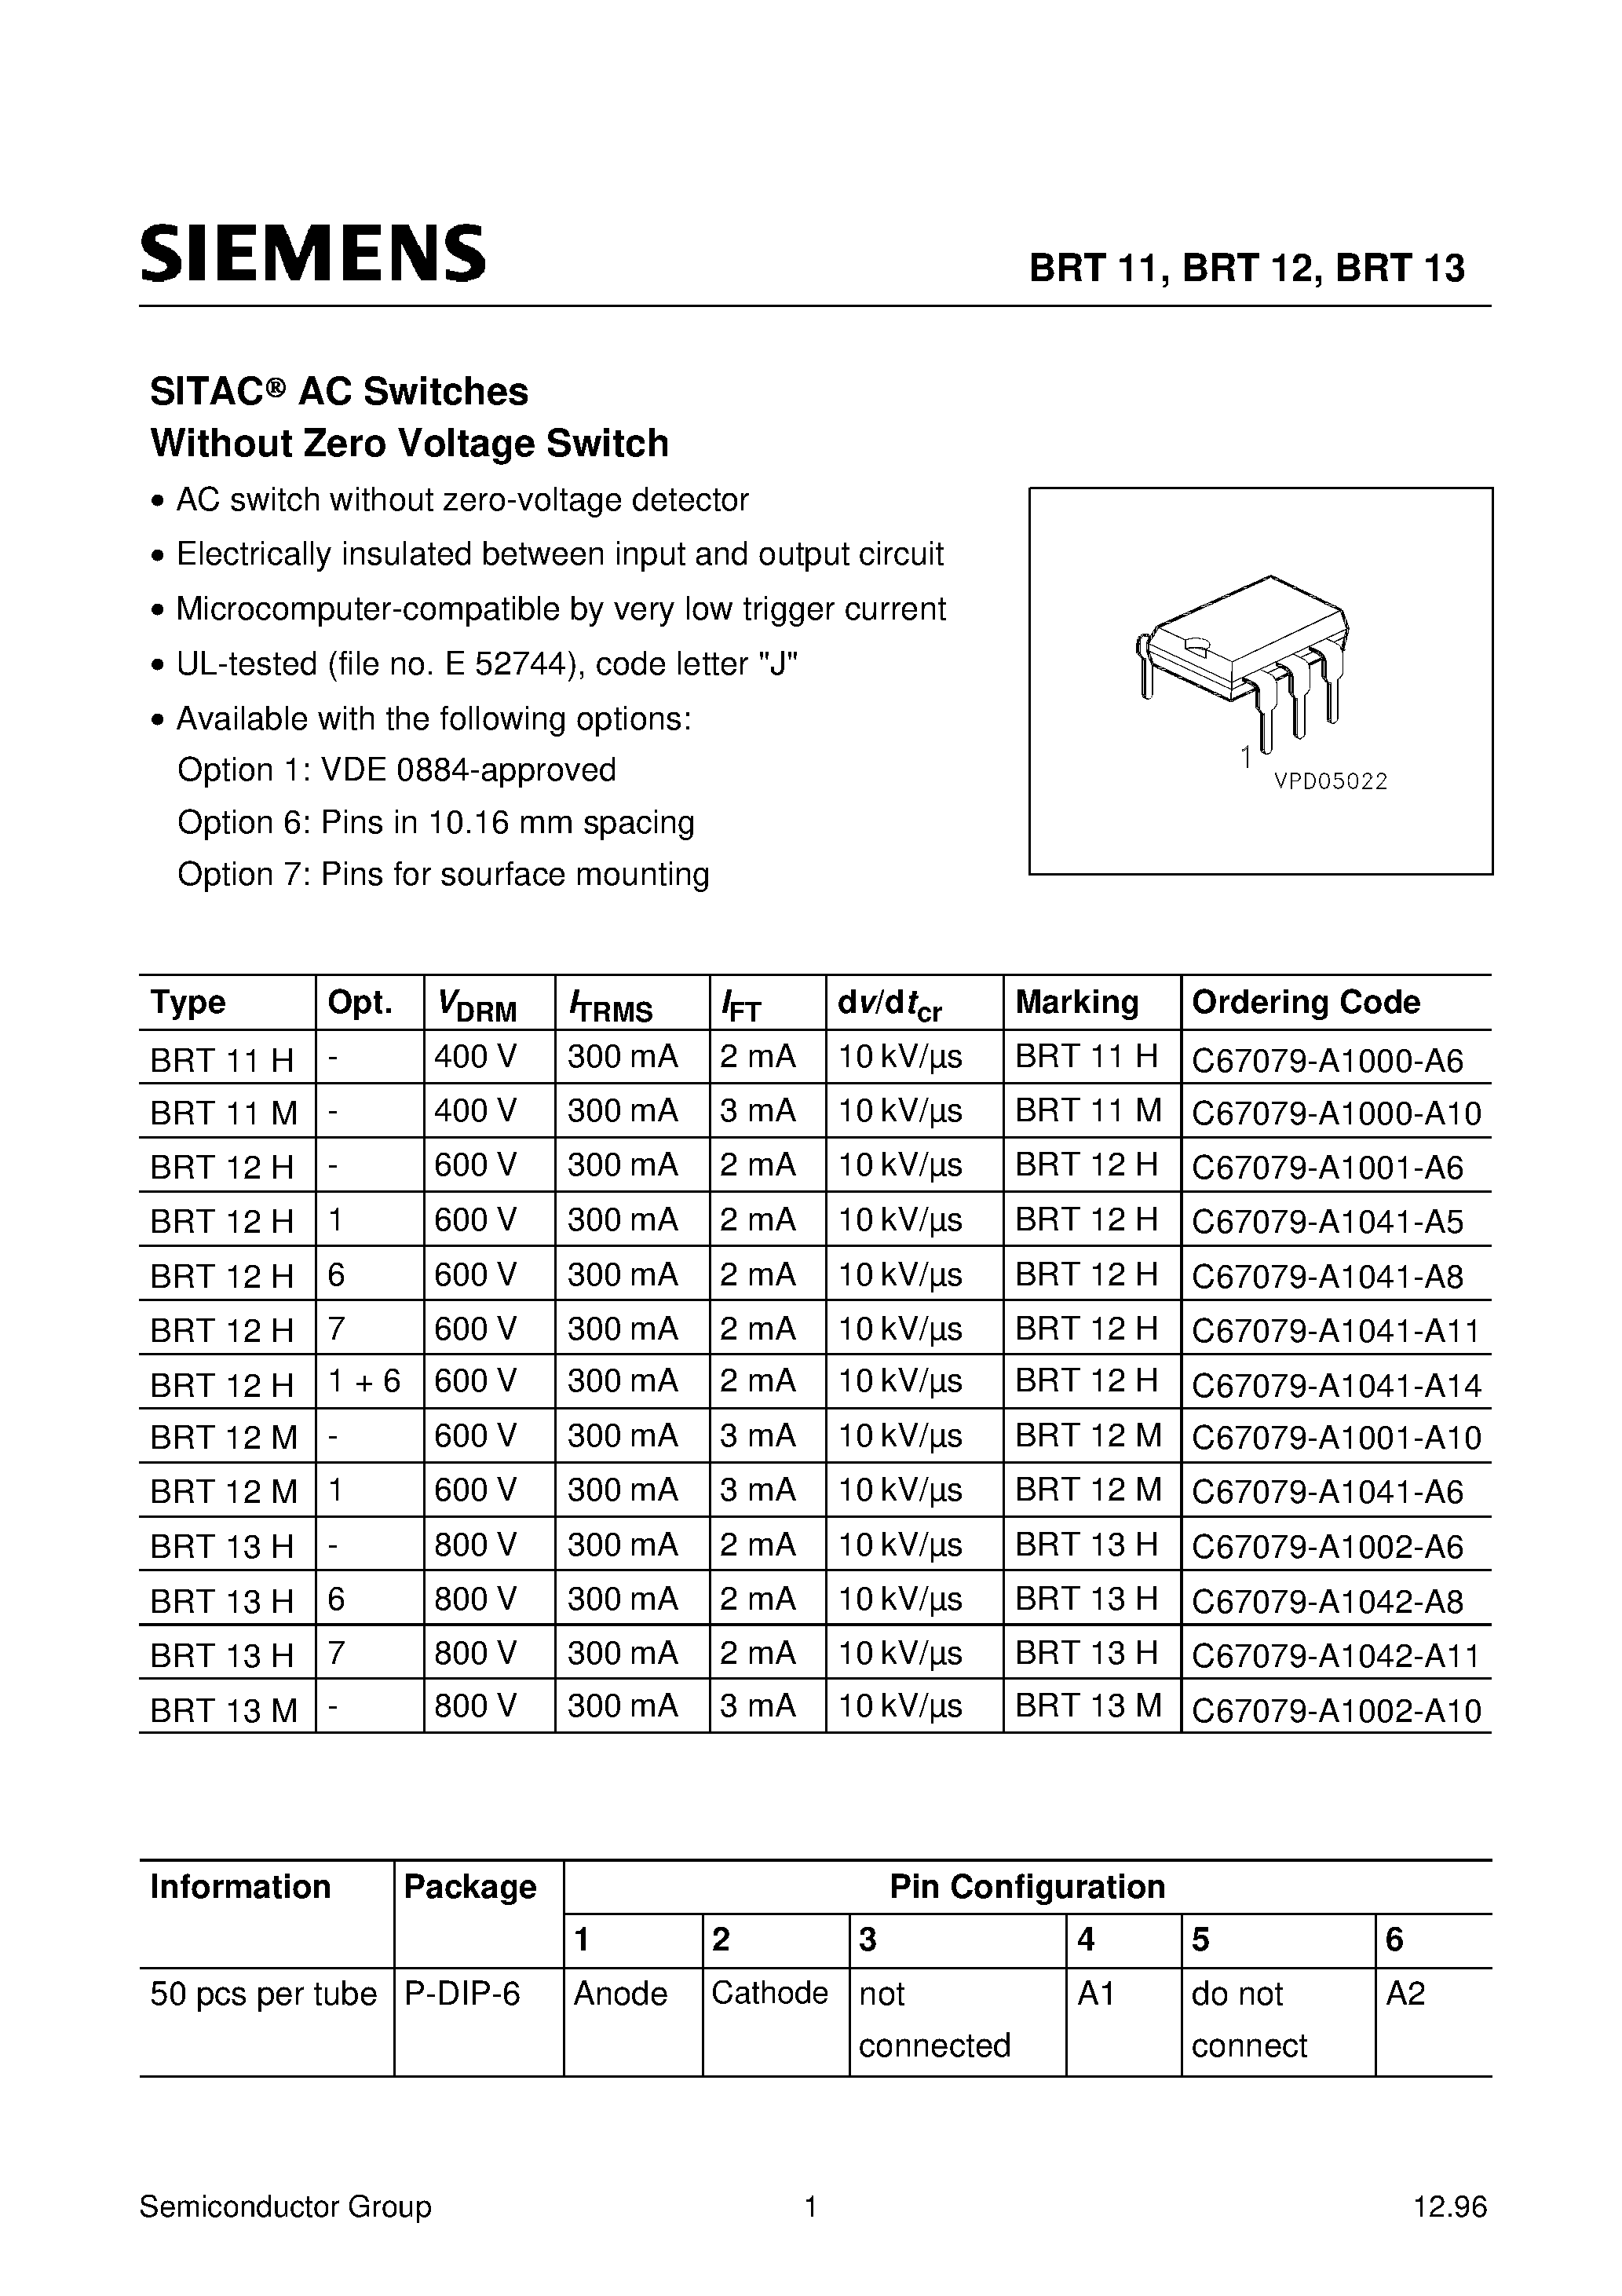 Datasheet BRT11 - SITACO AC Switches Without Zero Voltage Switch page 1